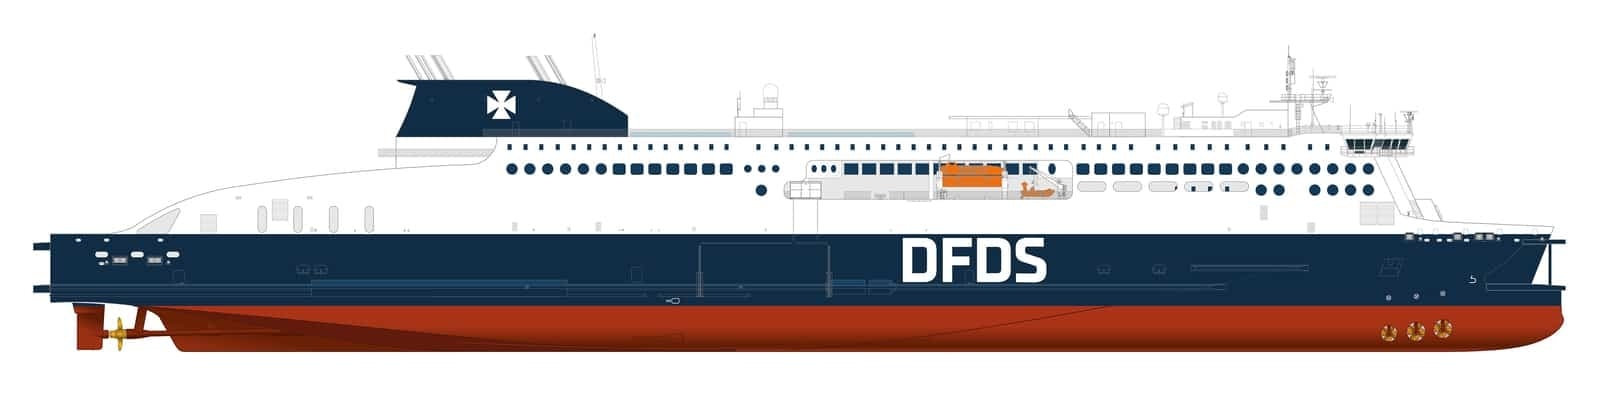 Updated DFDS Stena E-Flexer render provided by Stena RoRo. Stena RoRo.